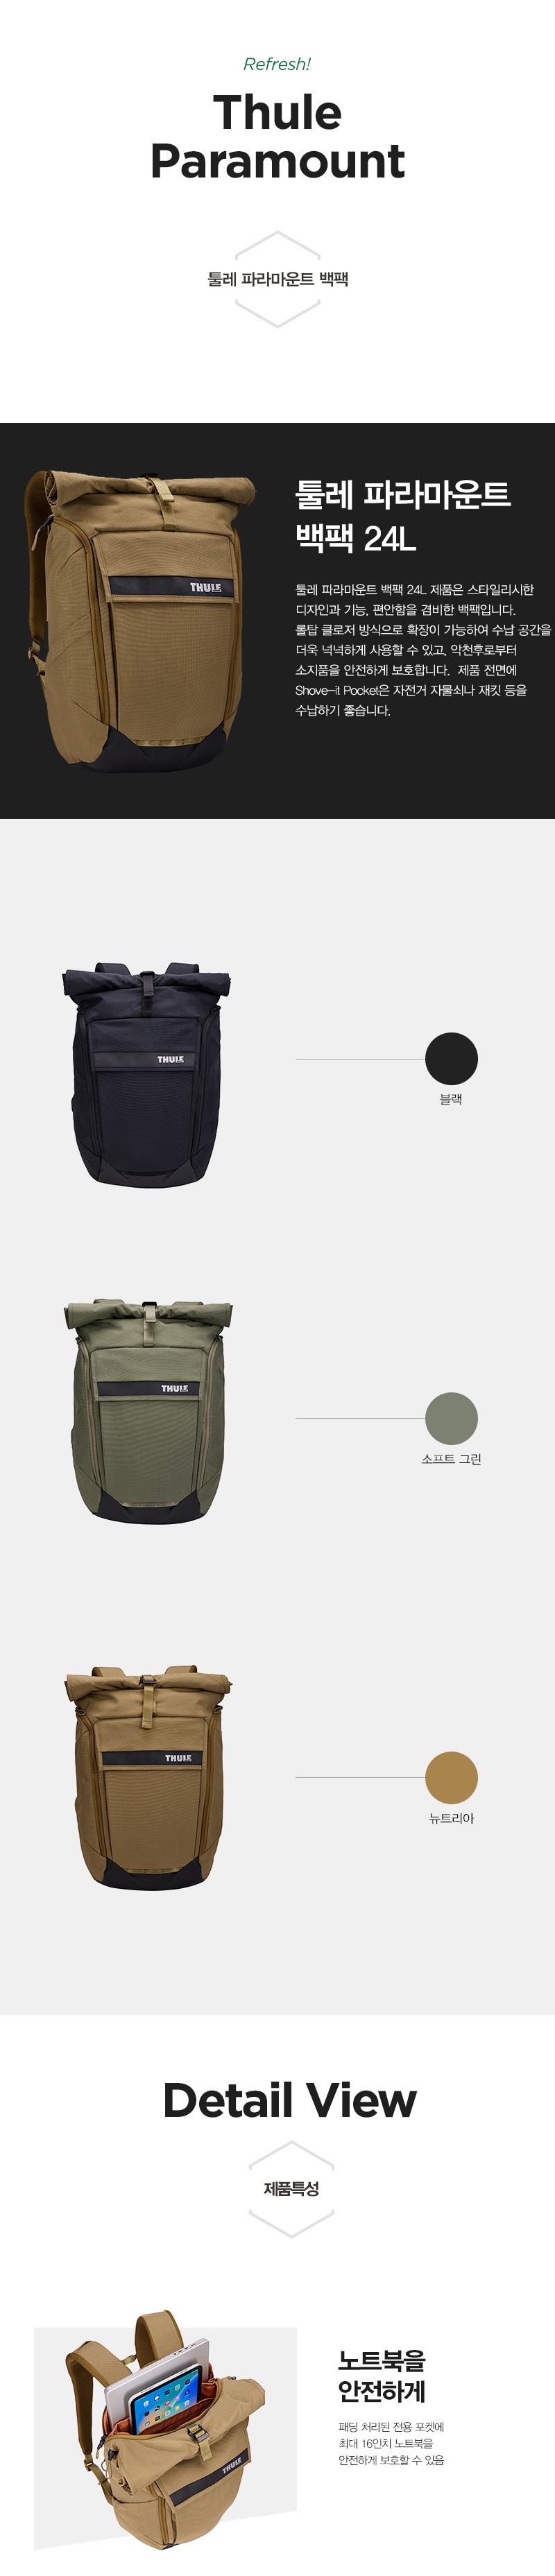 paramount-backpack-24l-01.jpg